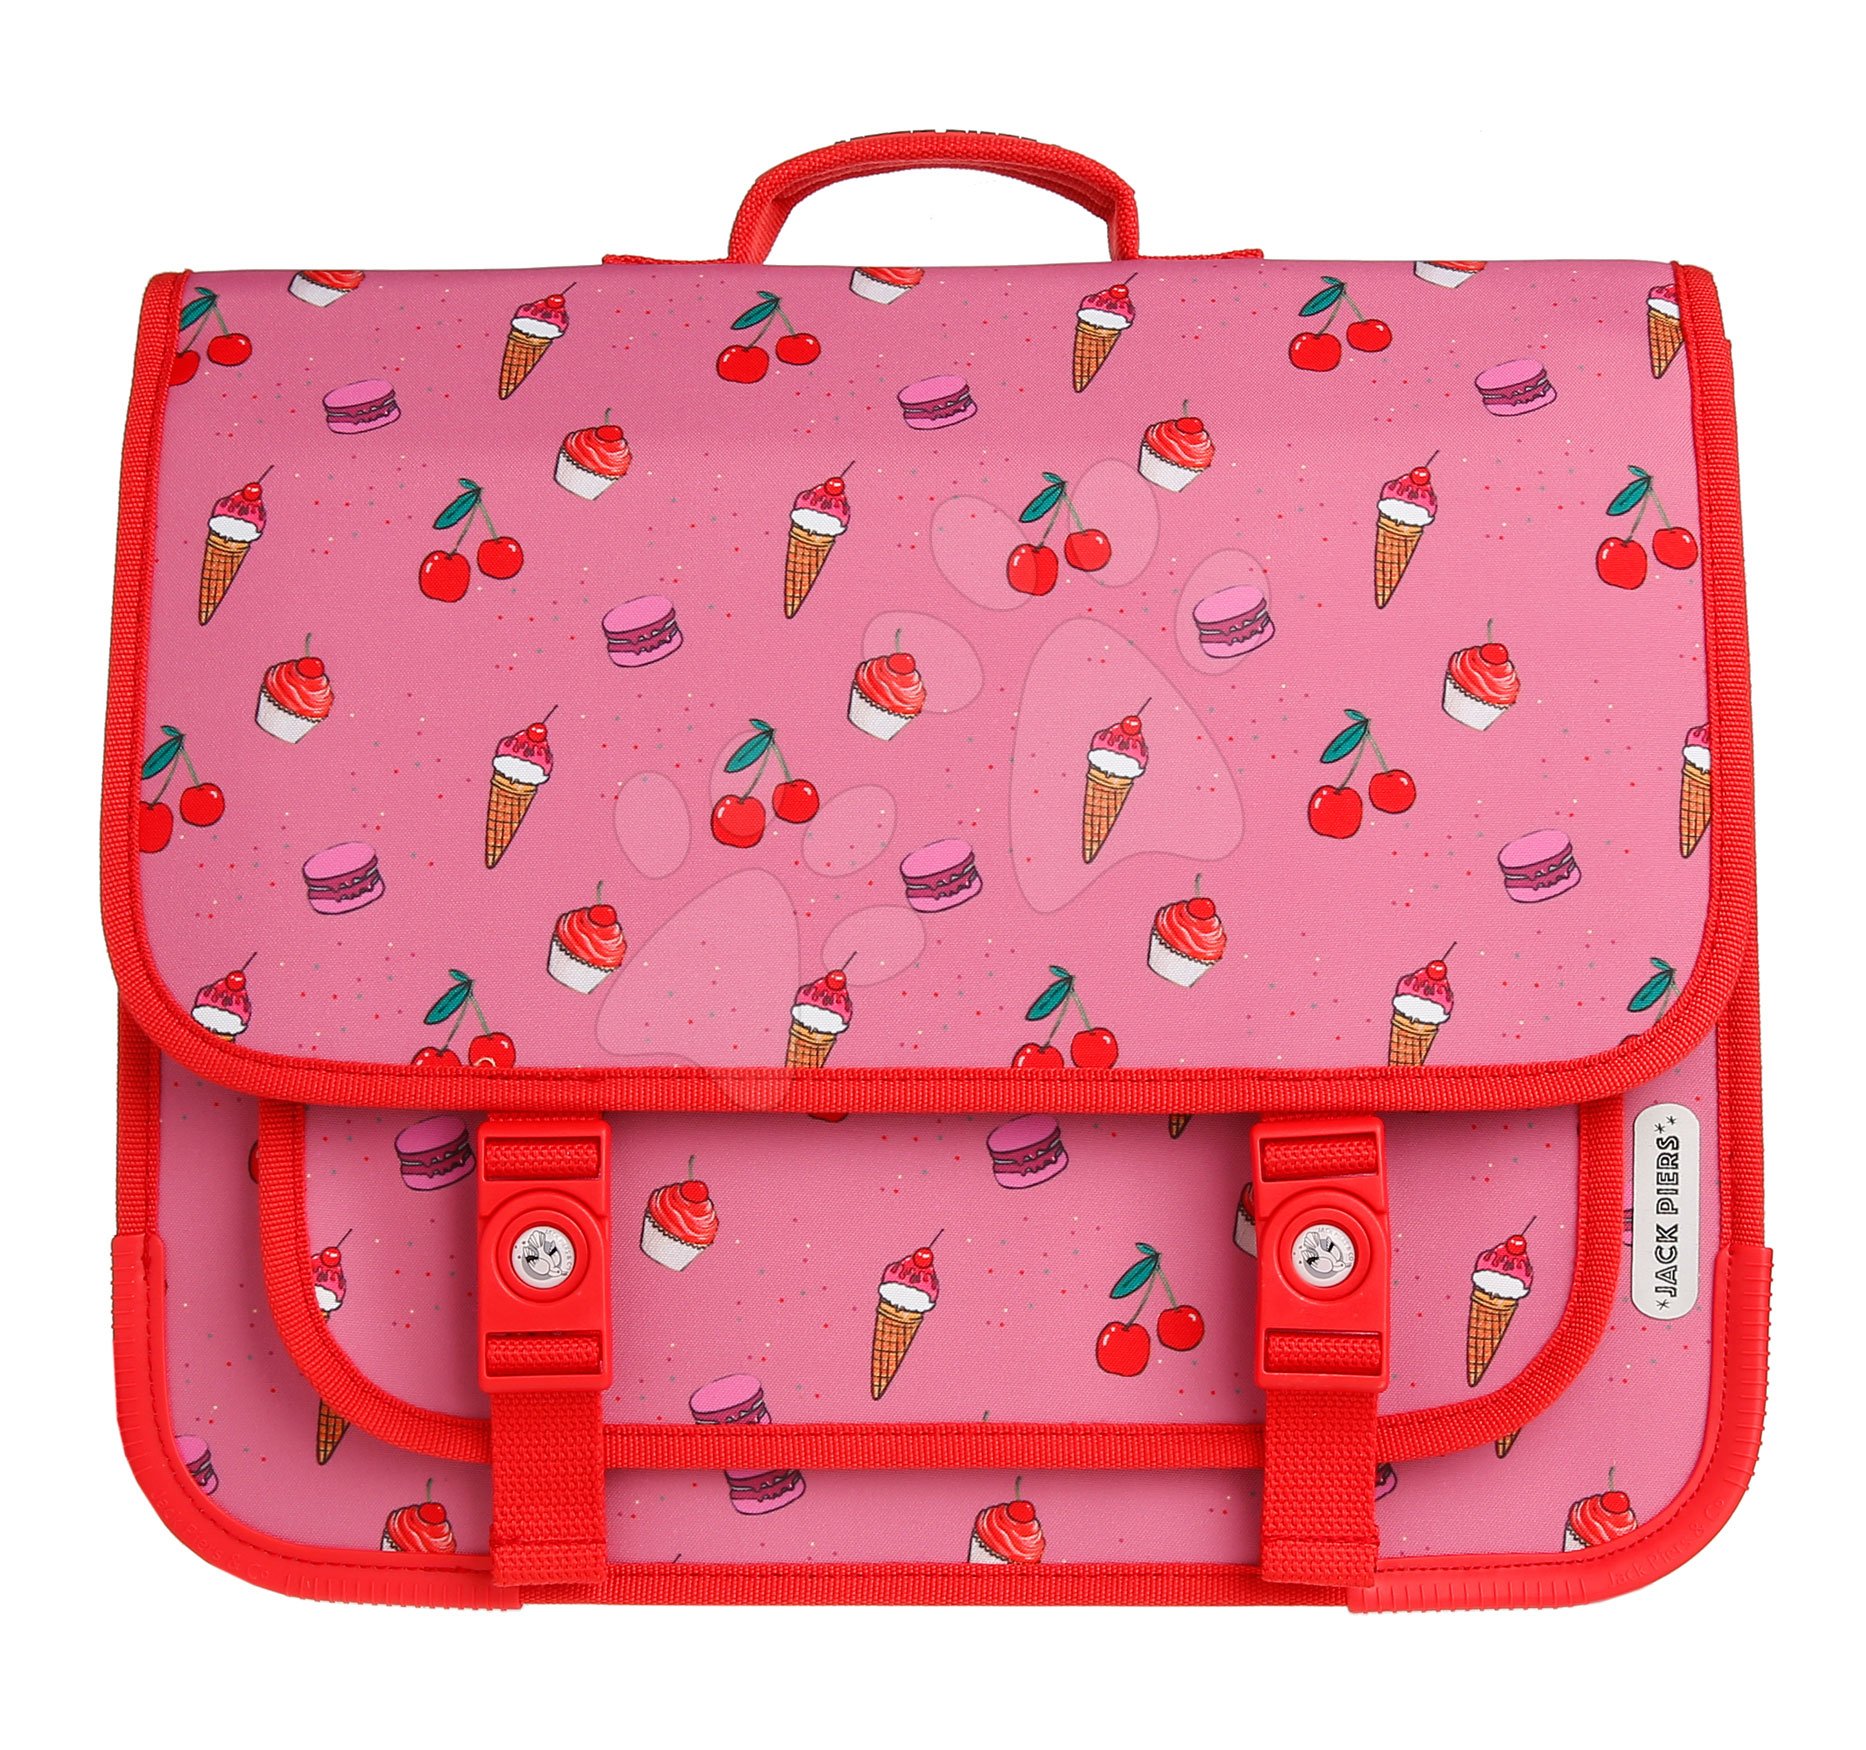 Iskolai aktatáska Schoolbag Paris Large Cherry Pop Jack Piers ergonomikus luxus kivitelben 6 évtől  38*31*13 cm